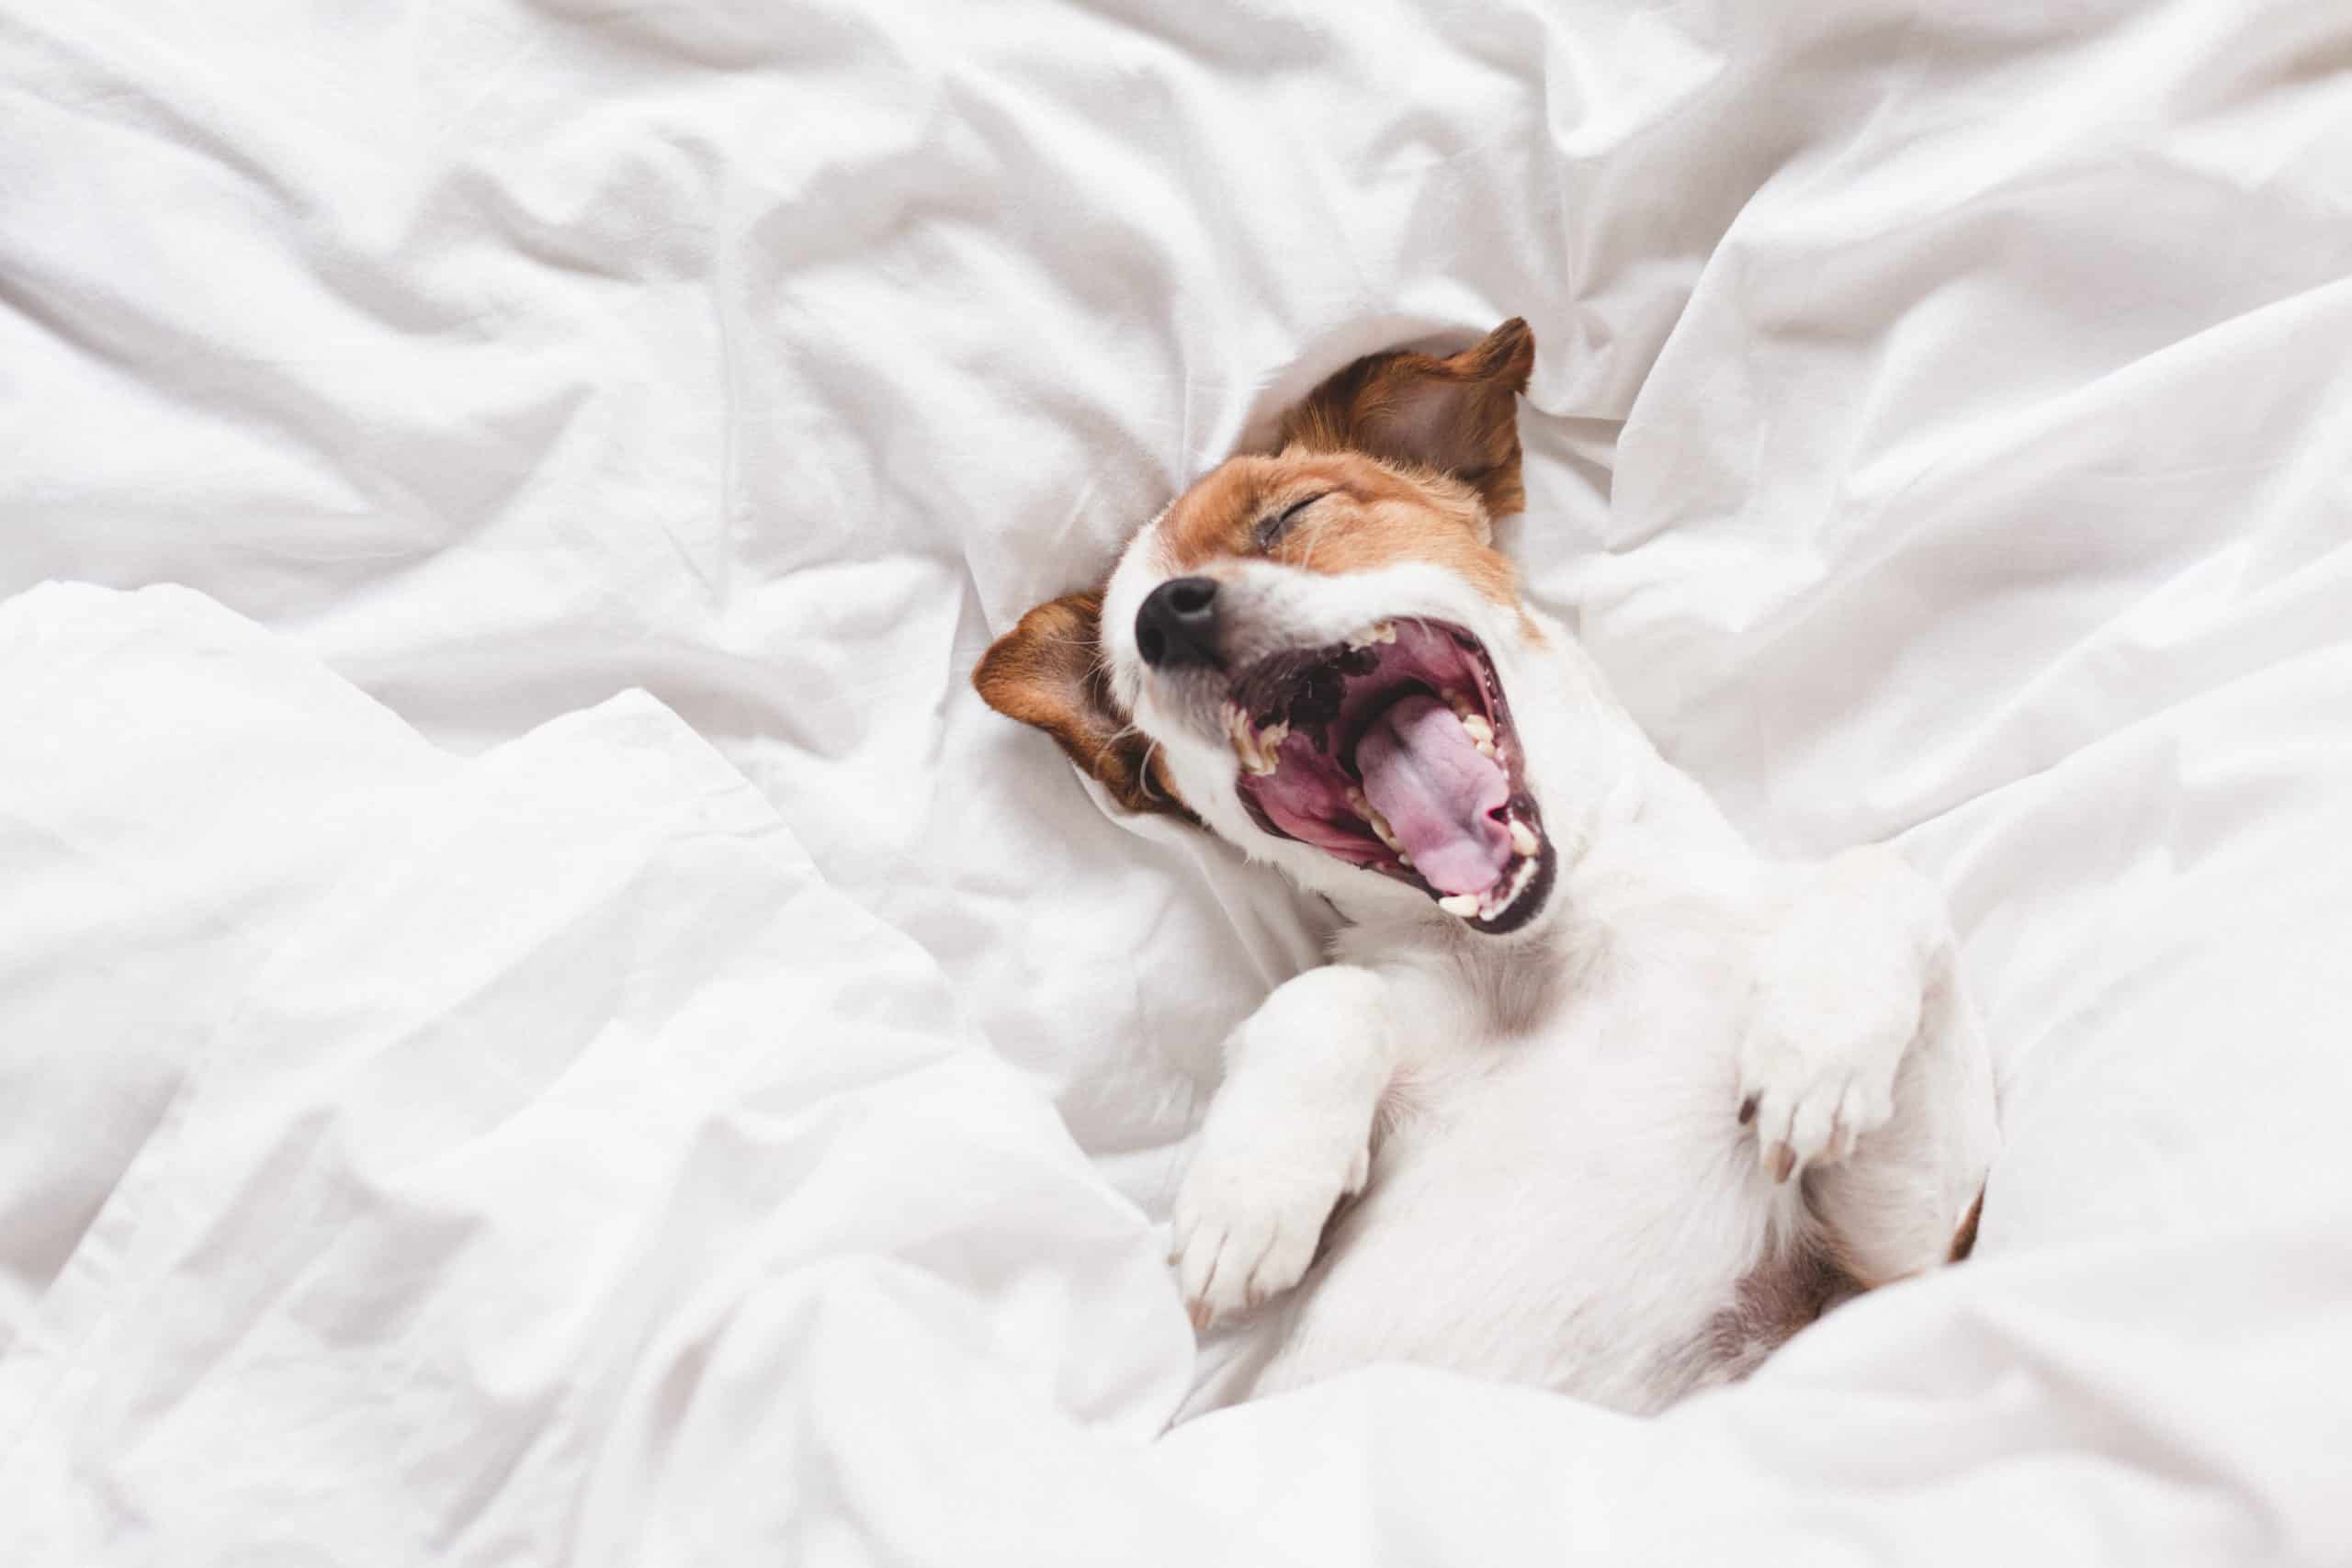 Do dogs poop in their sleep?